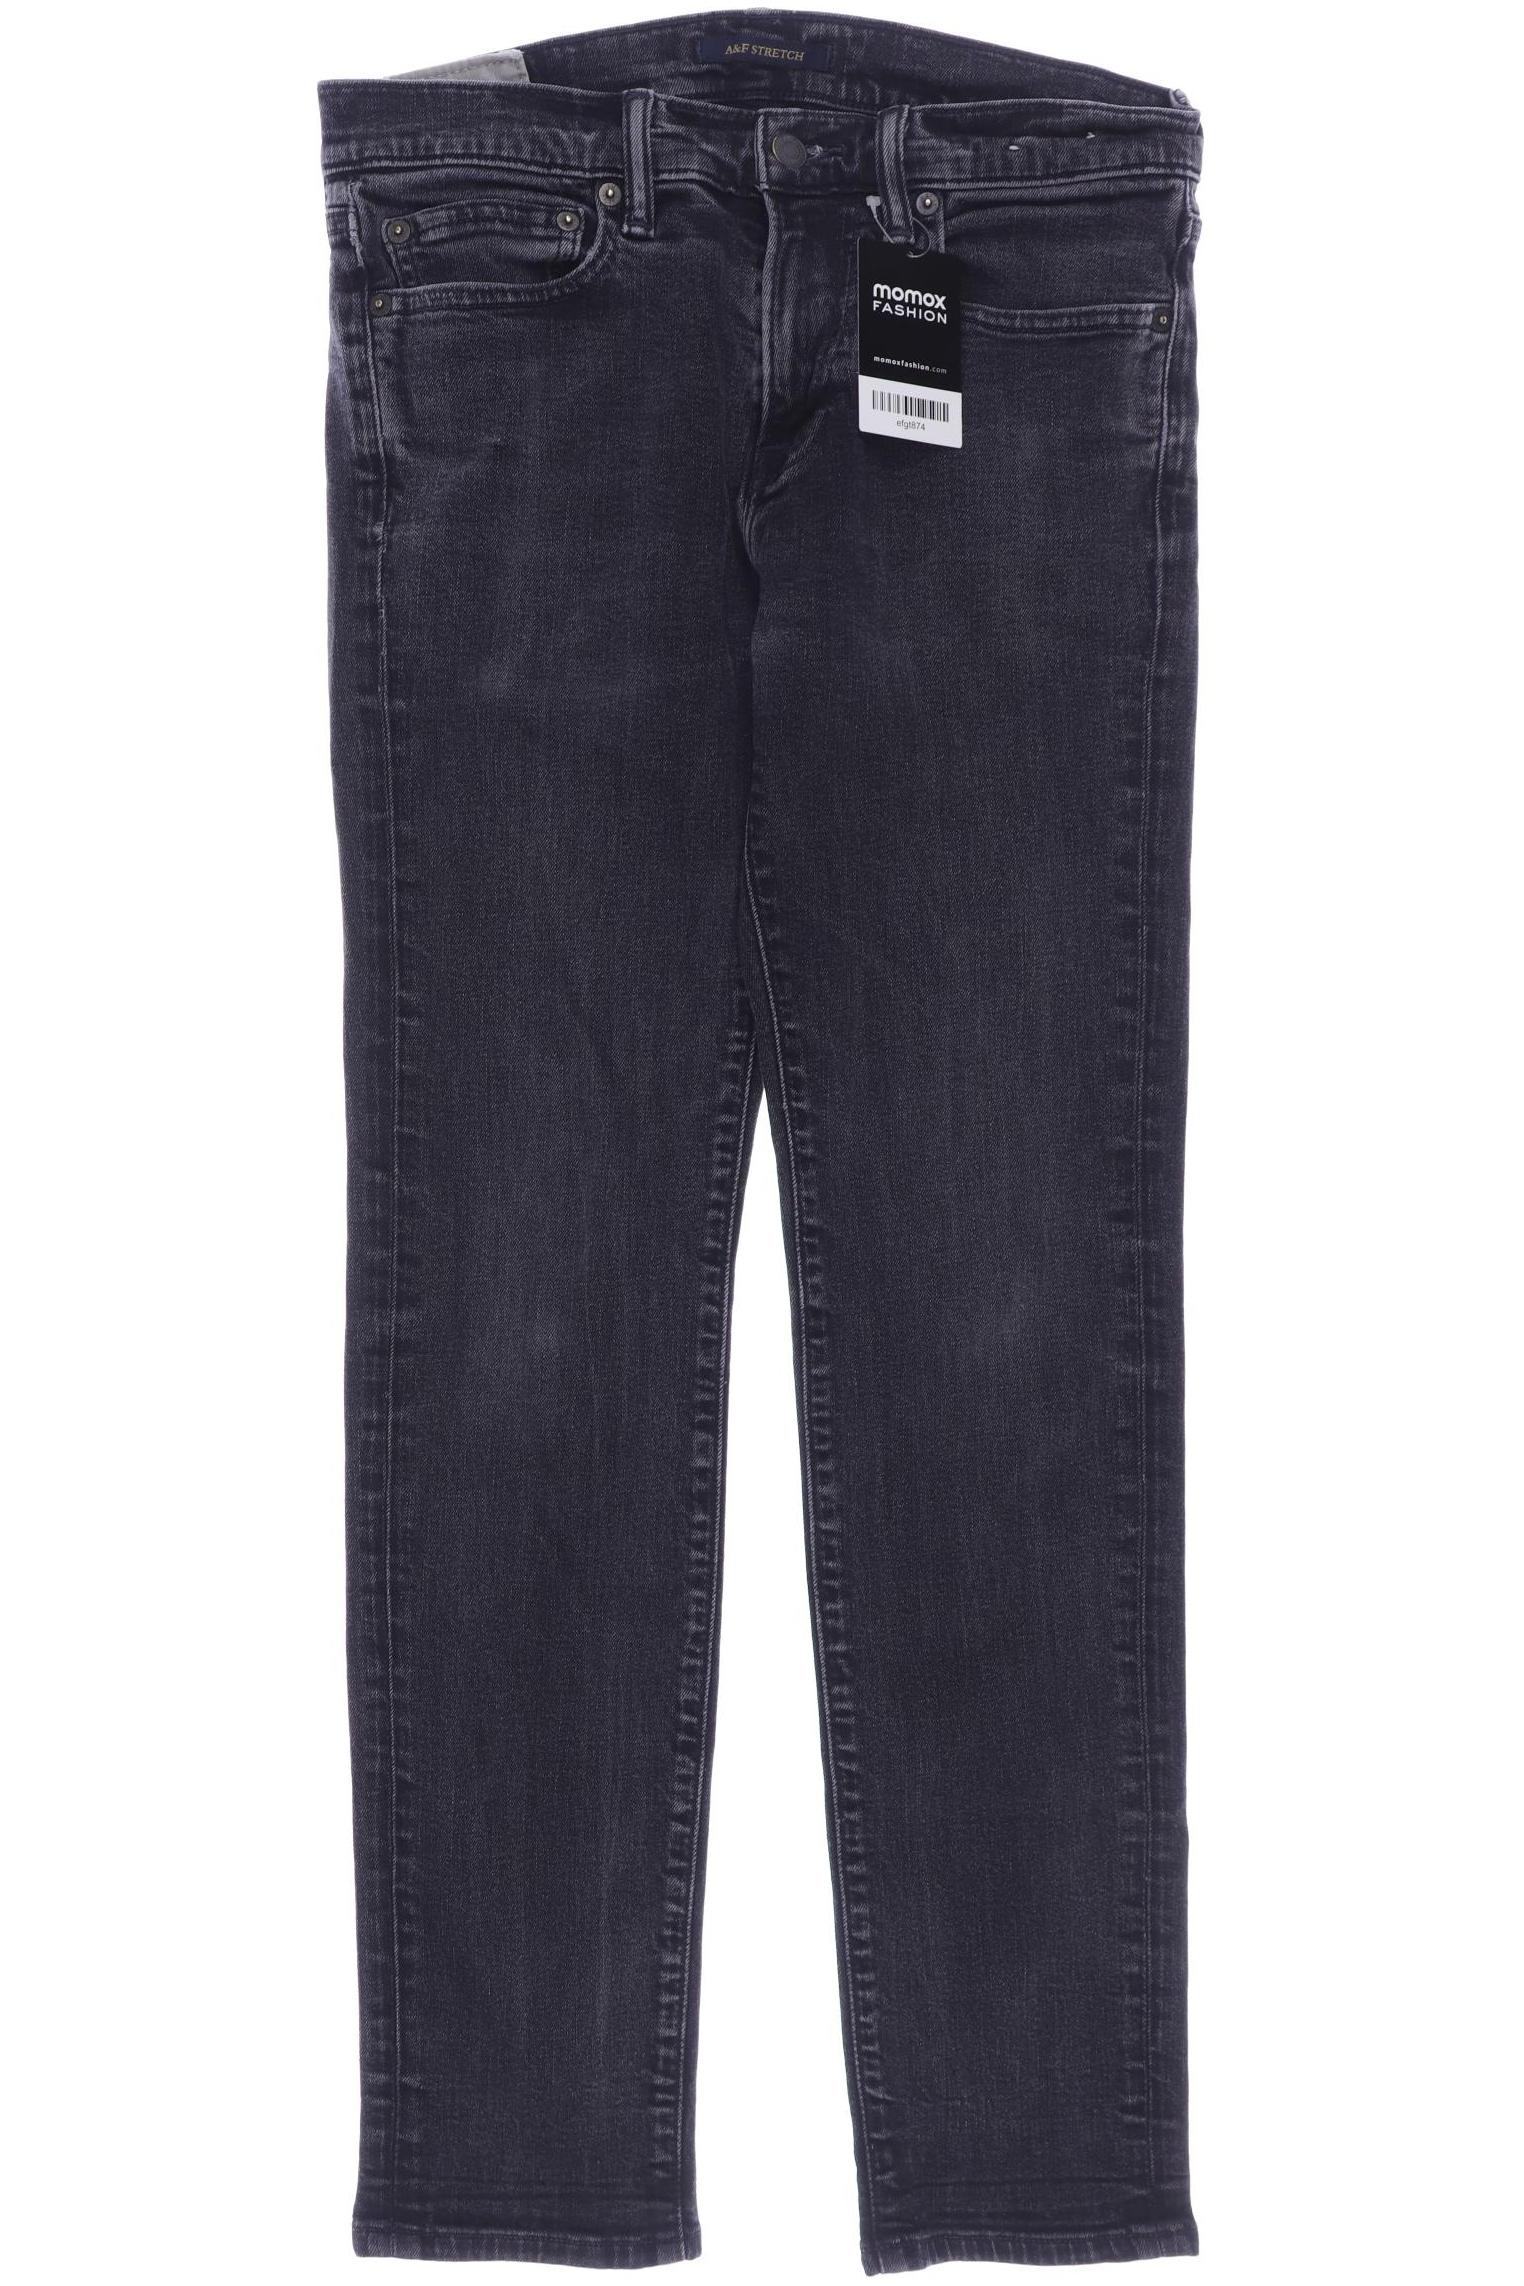 Abercrombie & Fitch Herren Jeans, grau von Abercrombie & Fitch